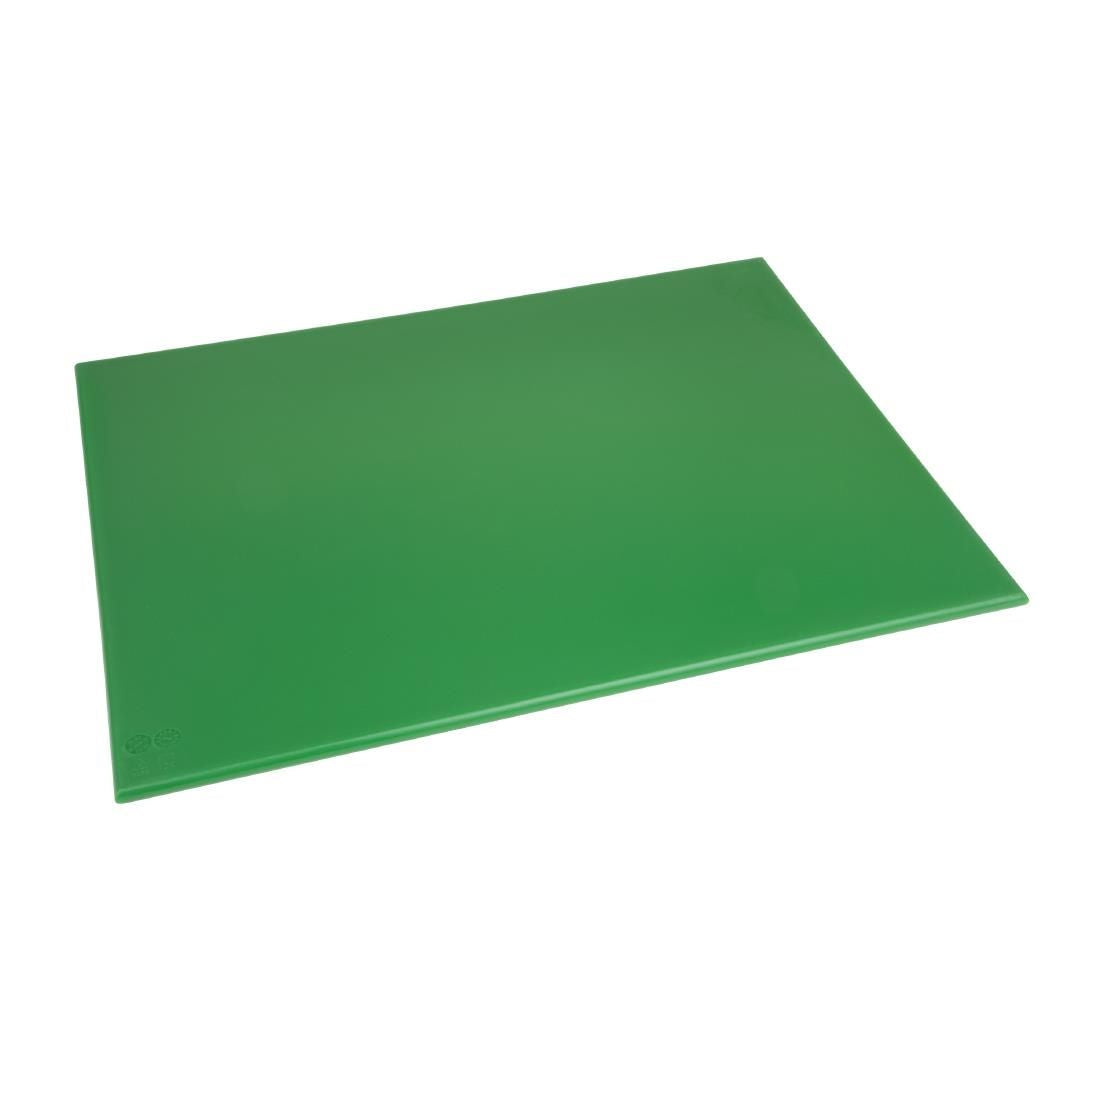 Hygiplas High Density Green Chopping Board Large JD Catering Equipment Solutions Ltd